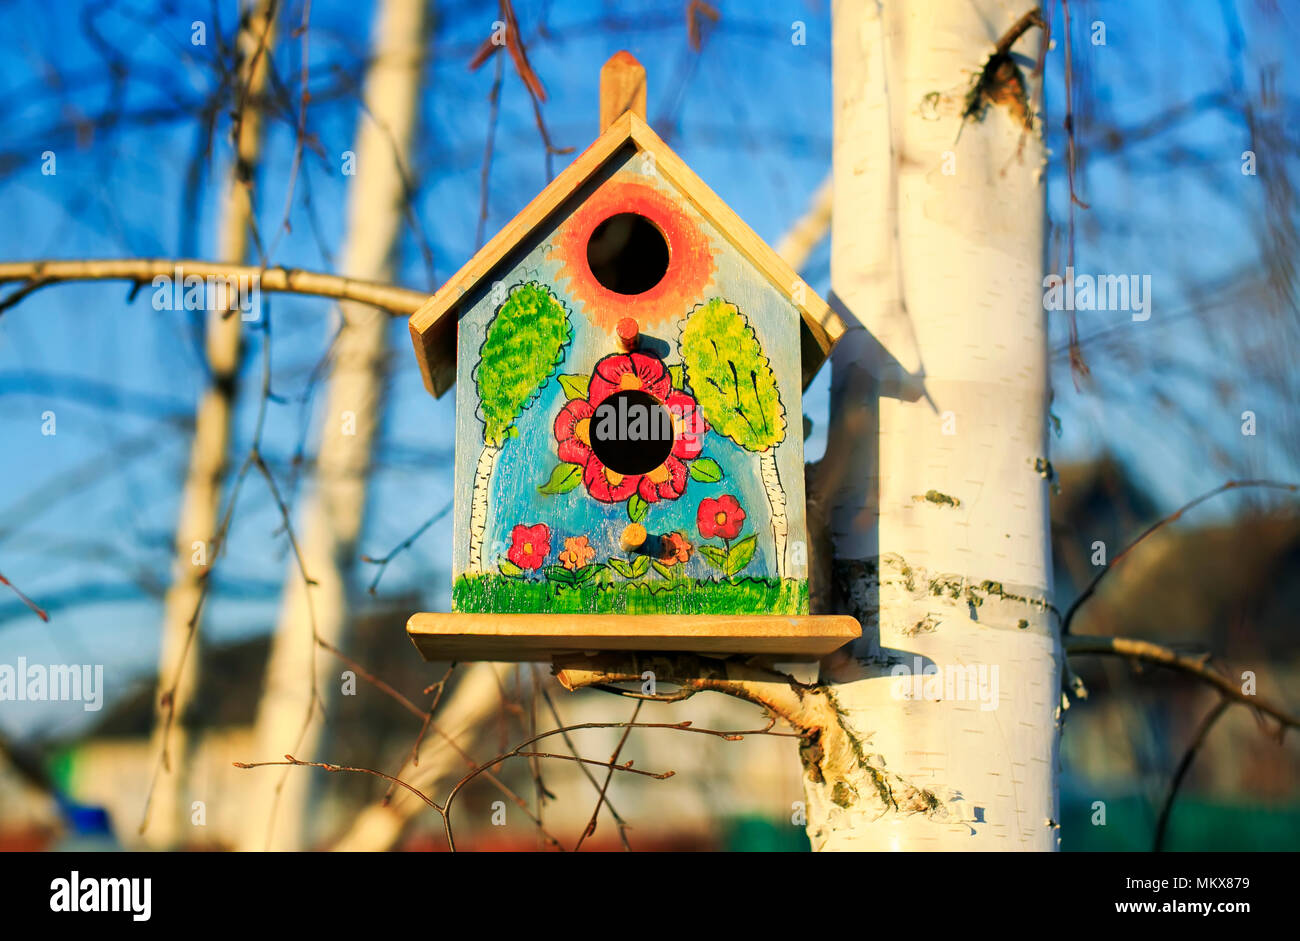 Dos lindas casitas para pájaros de madera pintadas en colores brillantes